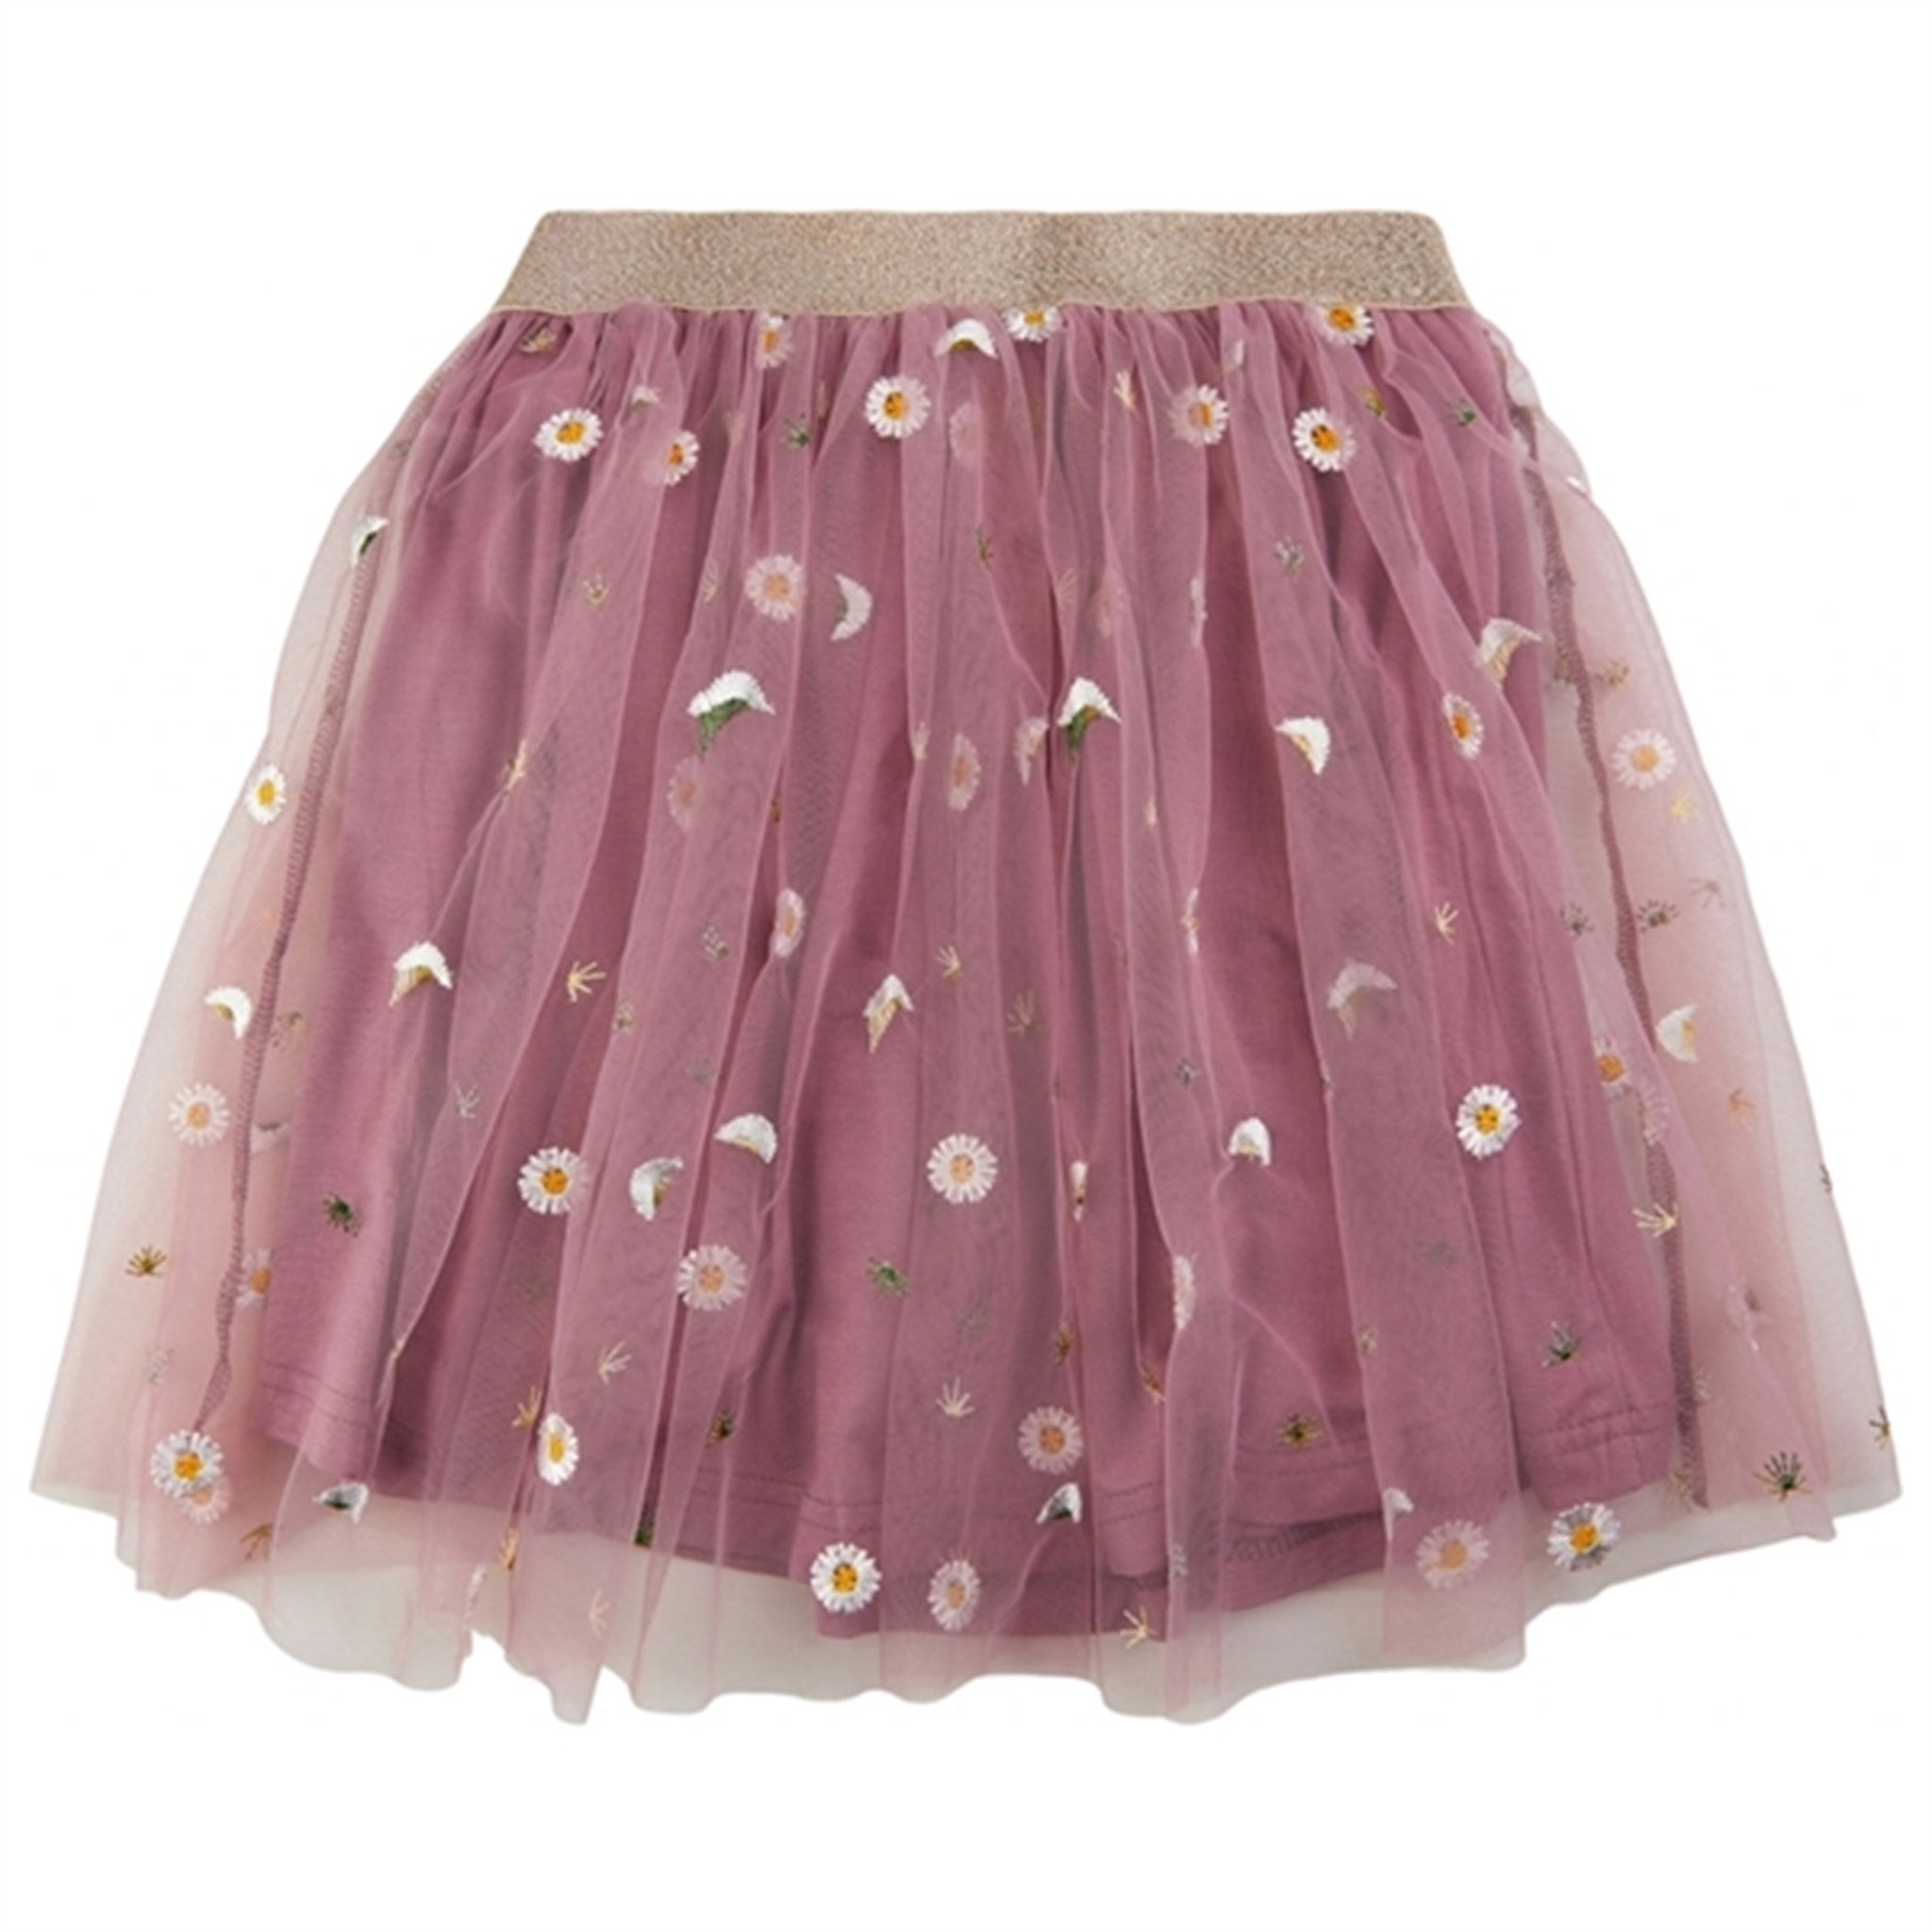 The New Lilas Bolette Skirt 2